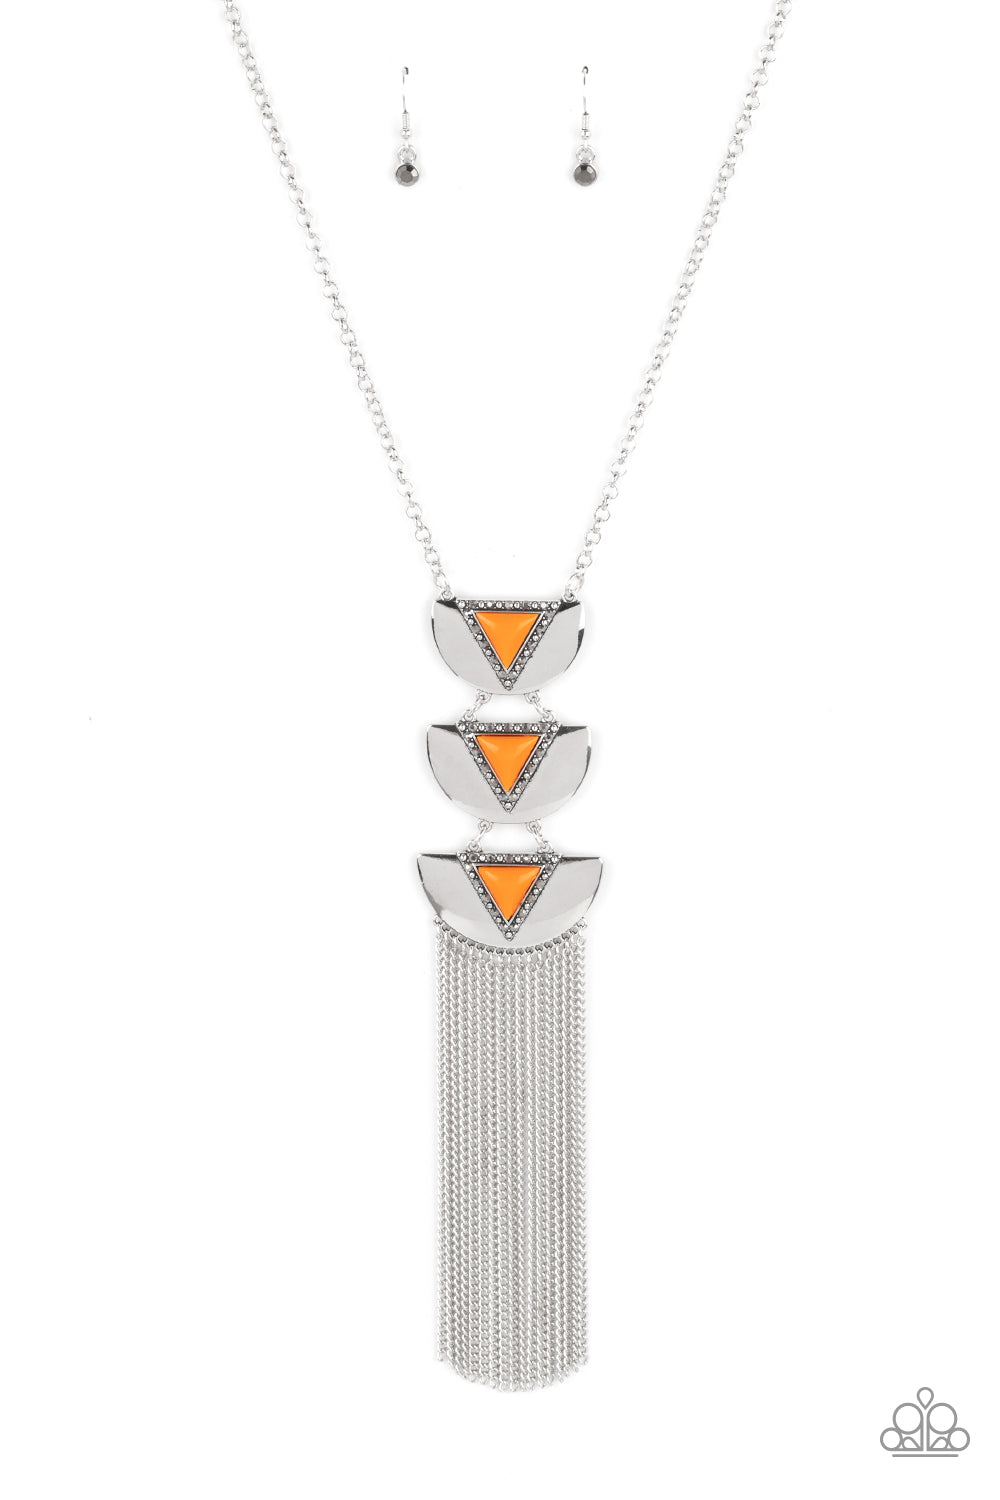 Gallery Expo - orange - Paparazzi necklace